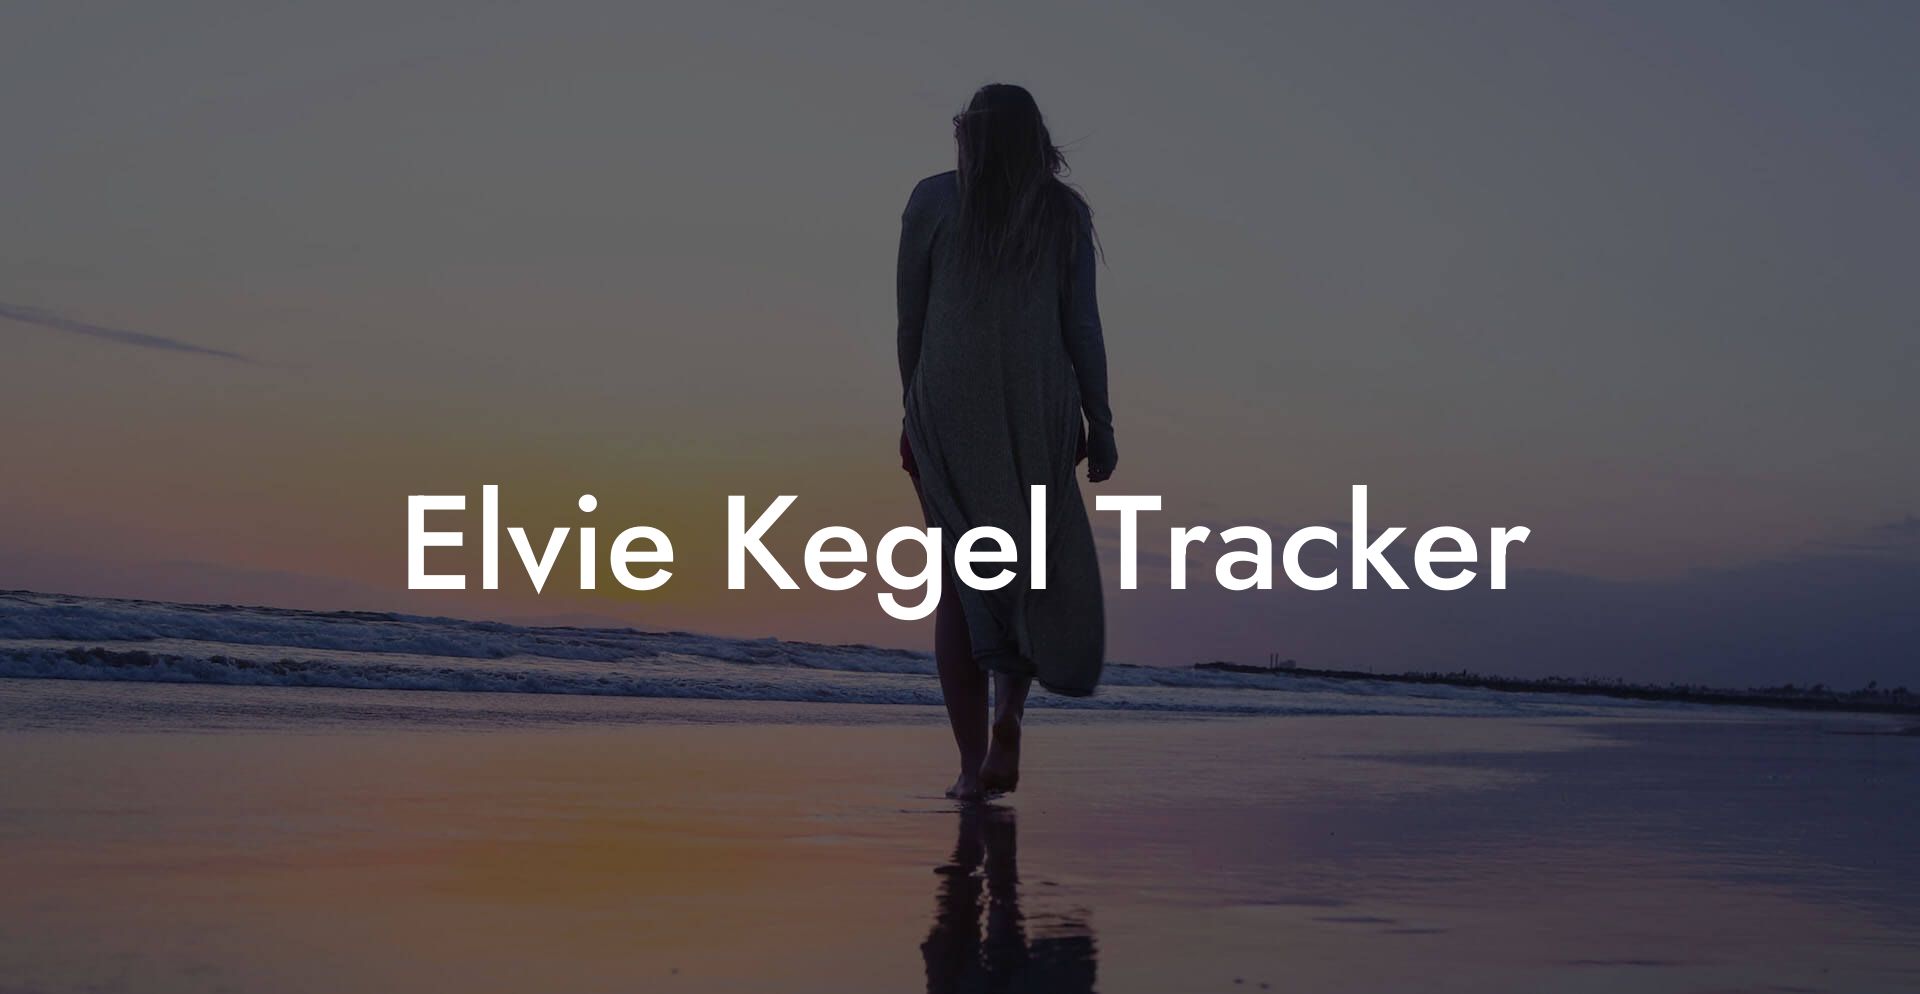 Elvie Kegel Tracker